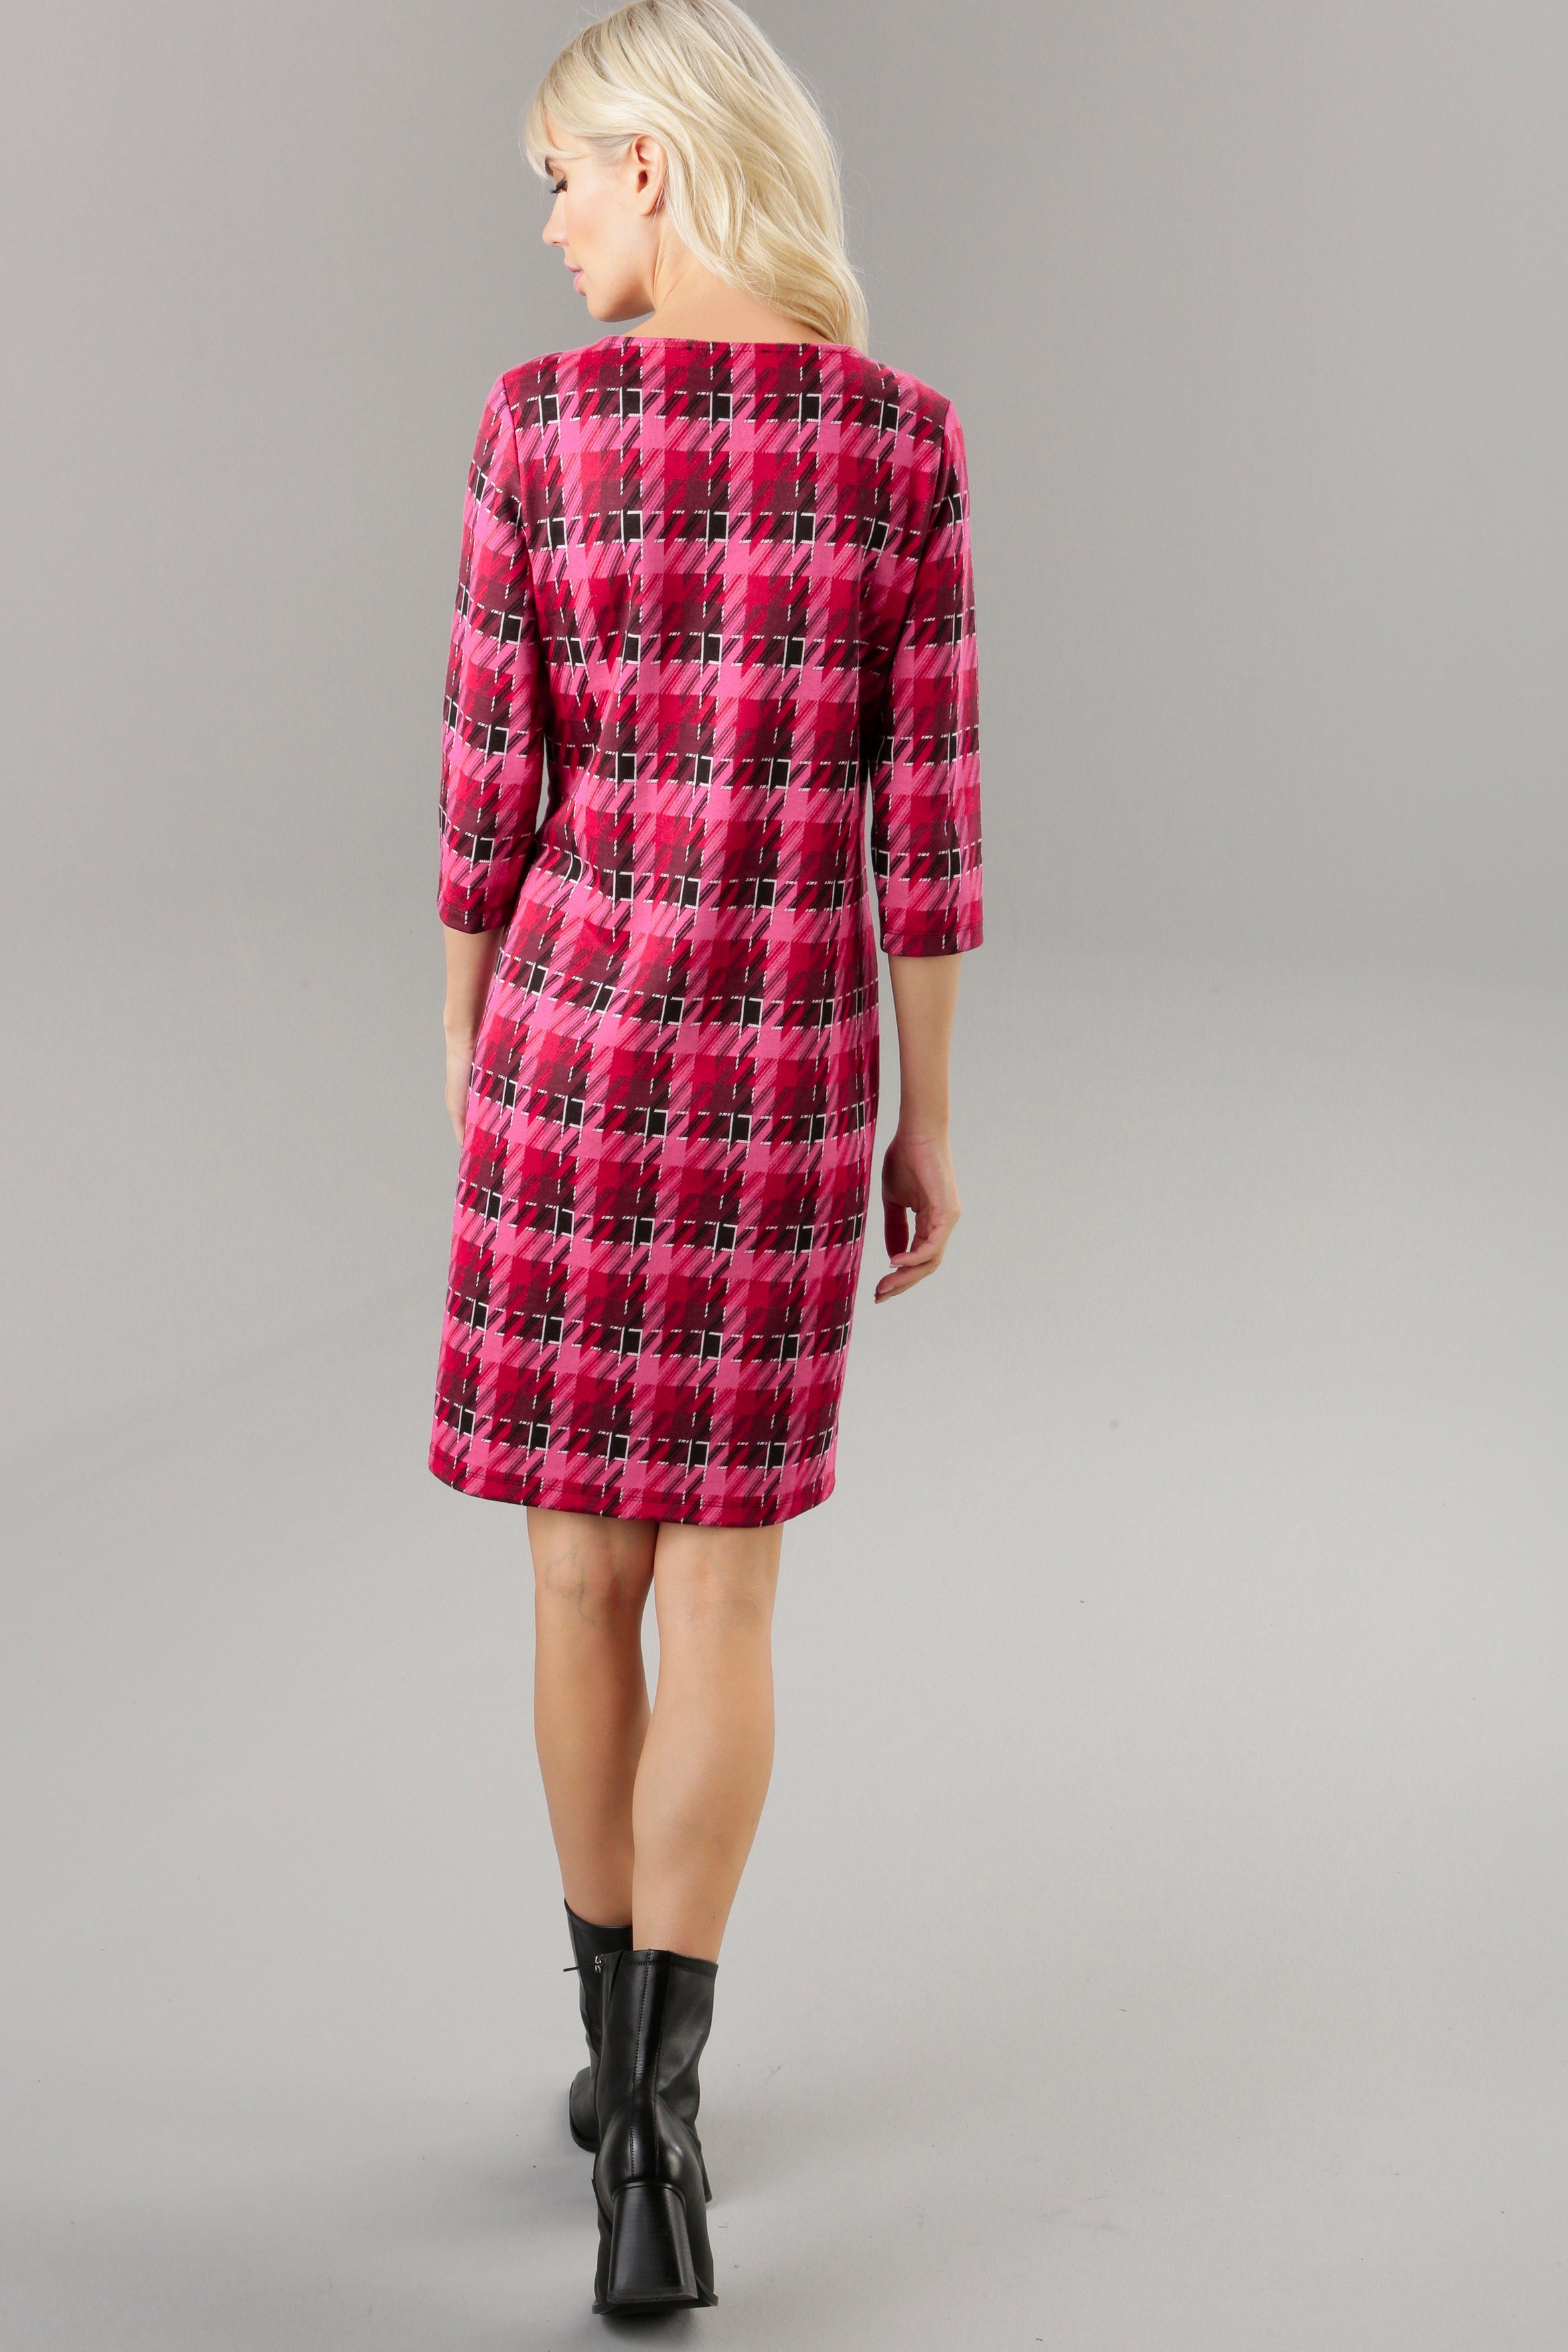 Jerseykleid in Knallfarben Allover-Muster Aniston SELECTED trendy mit